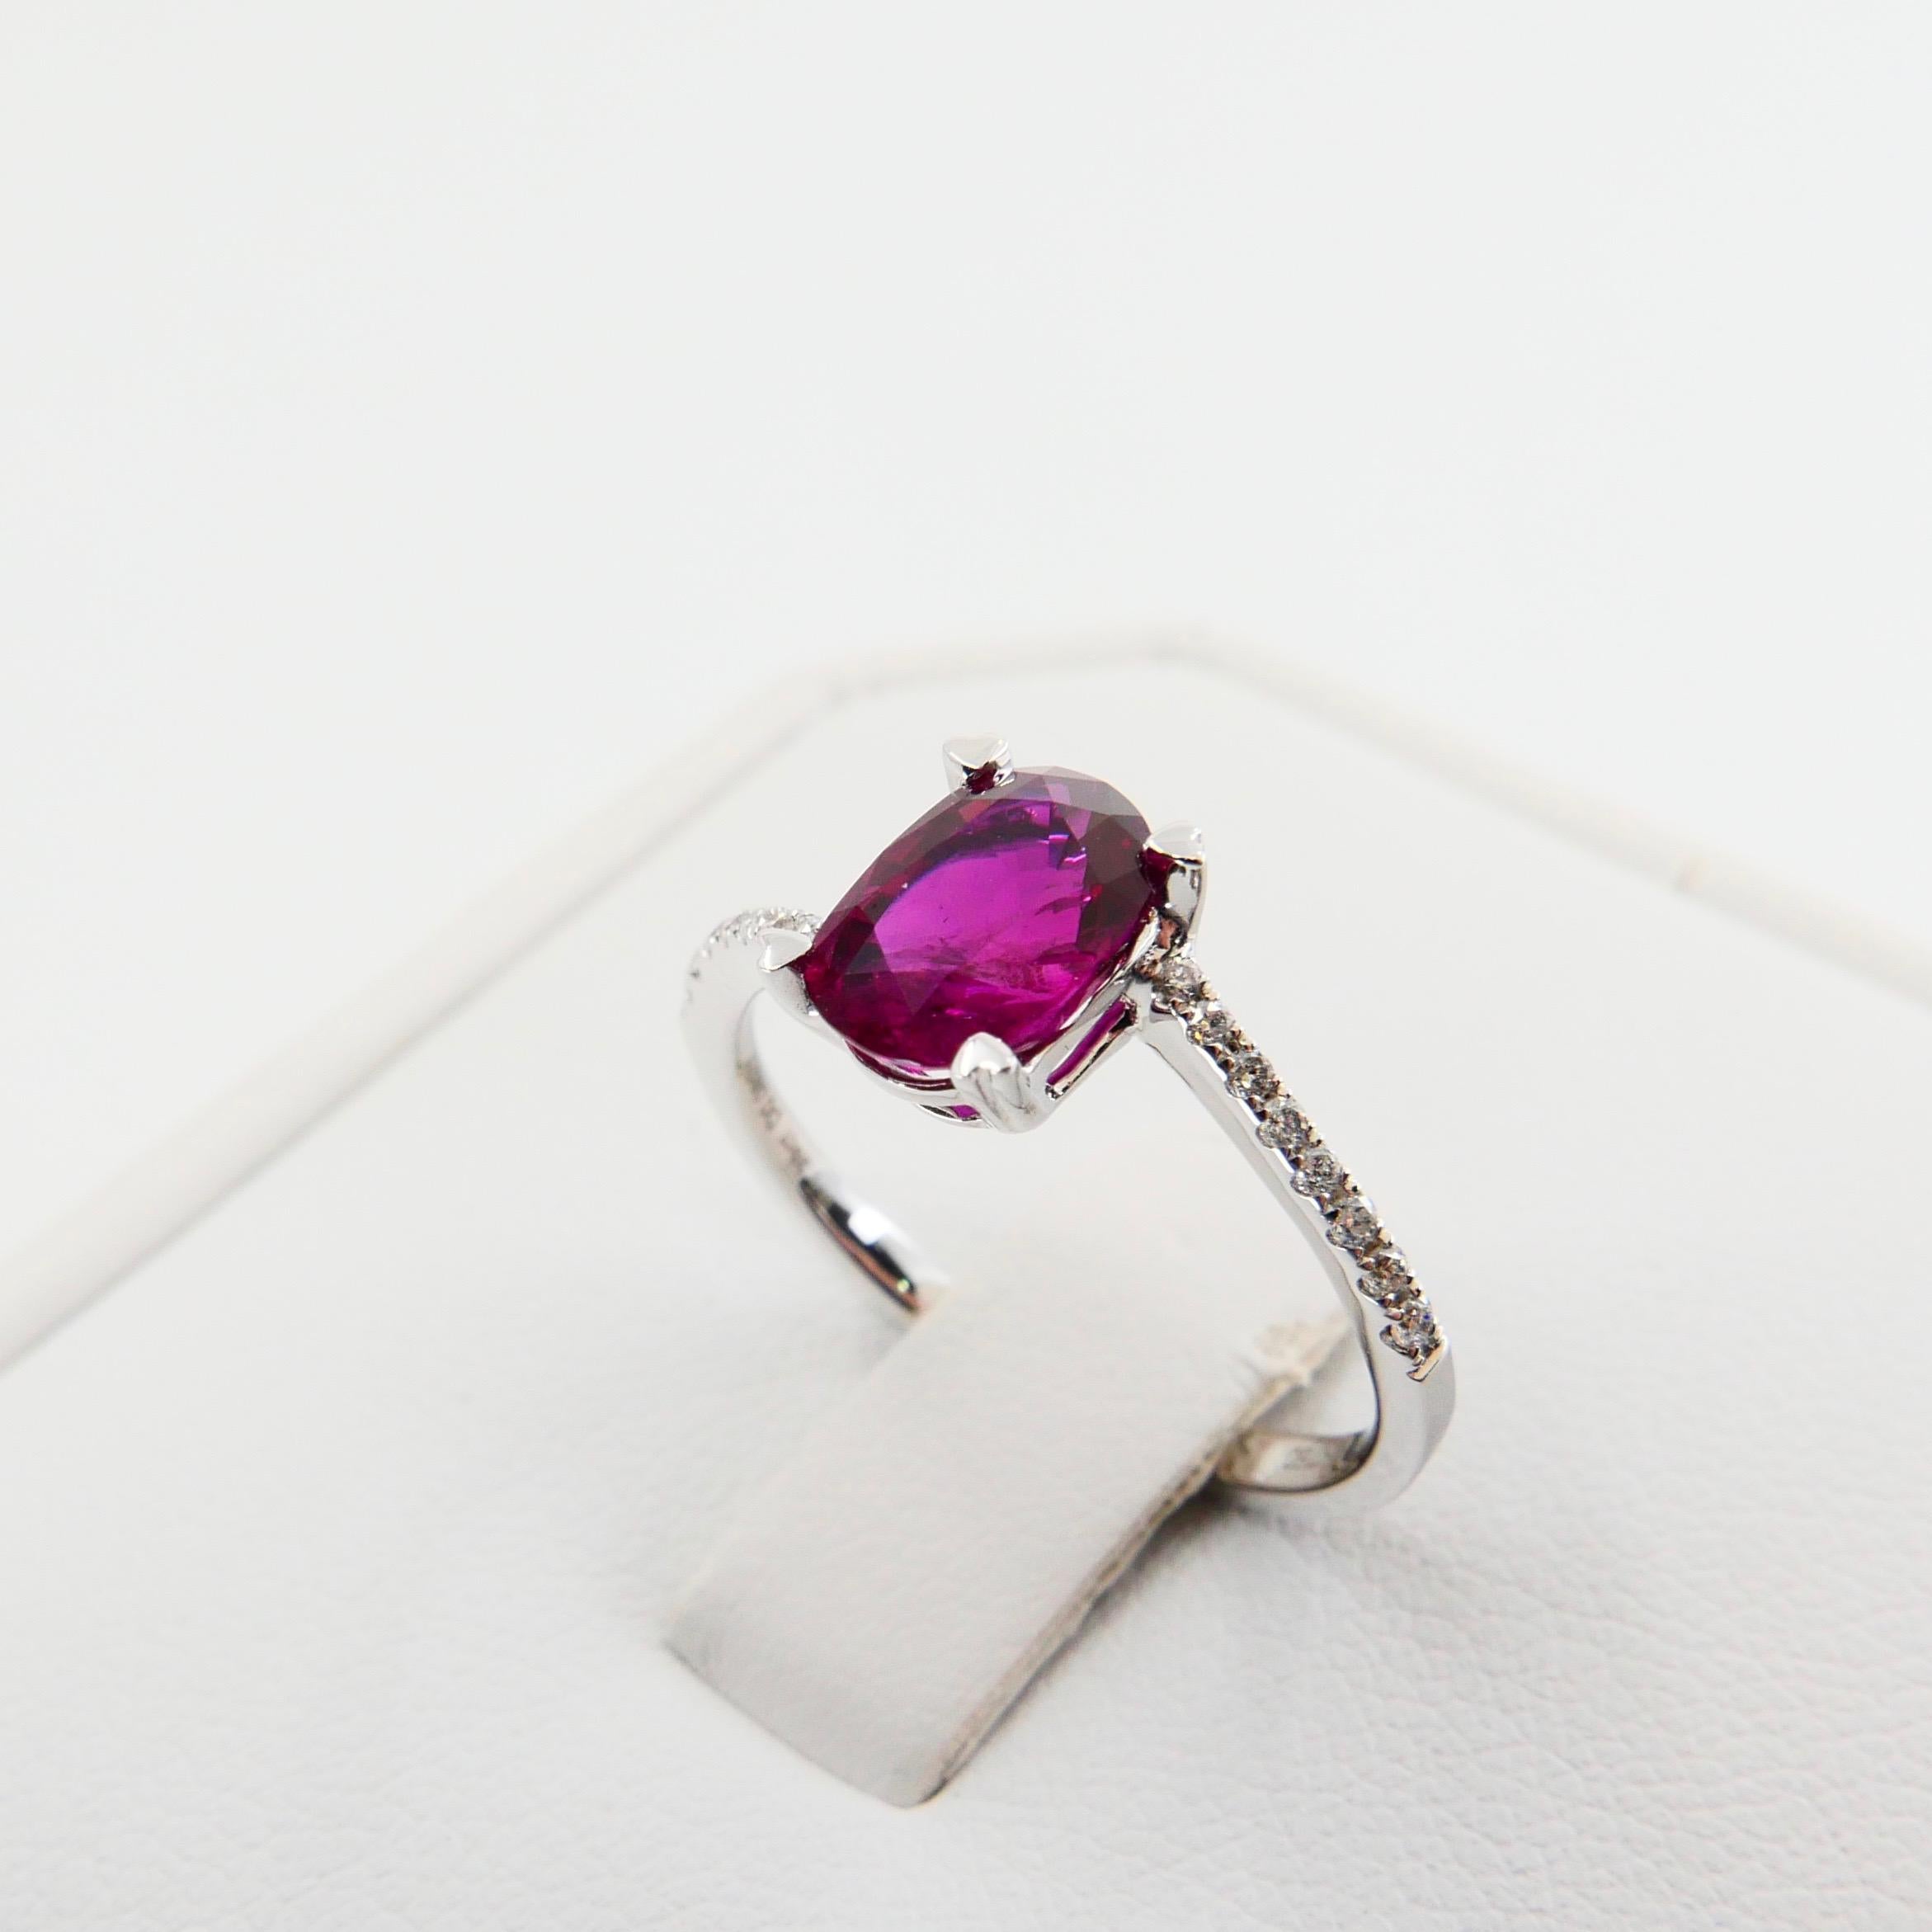 Burma Ruby 1.39 Carat and Diamond Ring, 18 Karat Gold, Heart Shaped Prongs For Sale 1